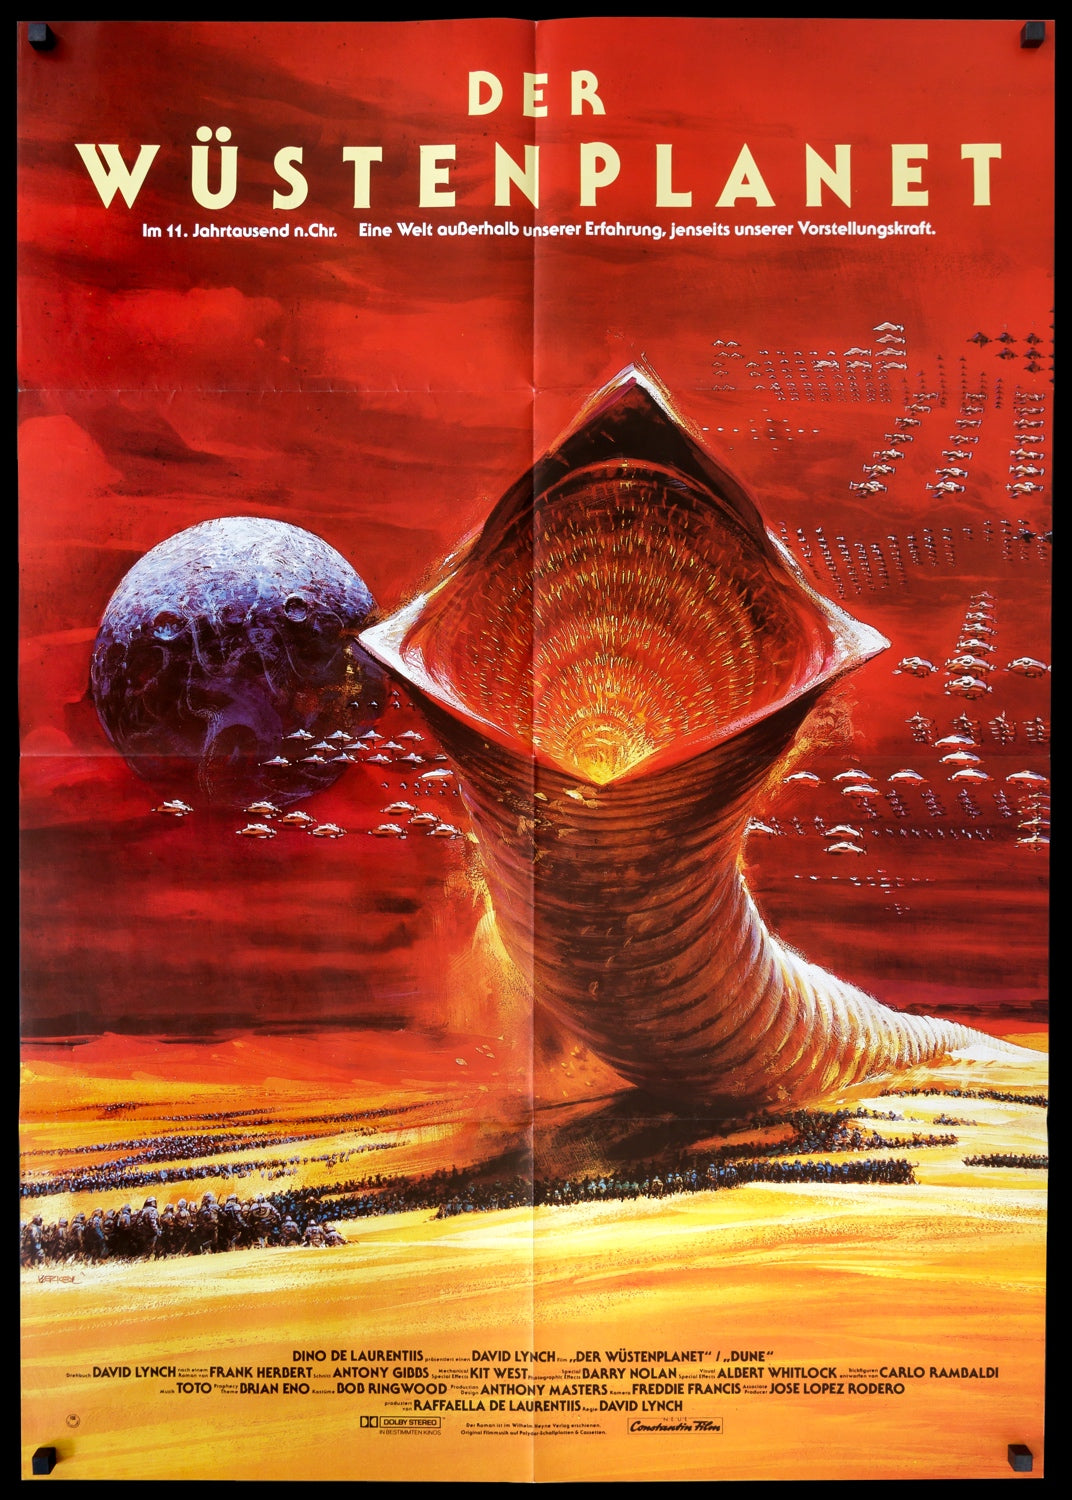 Dune (1984) original movie poster for sale at Original Film Art